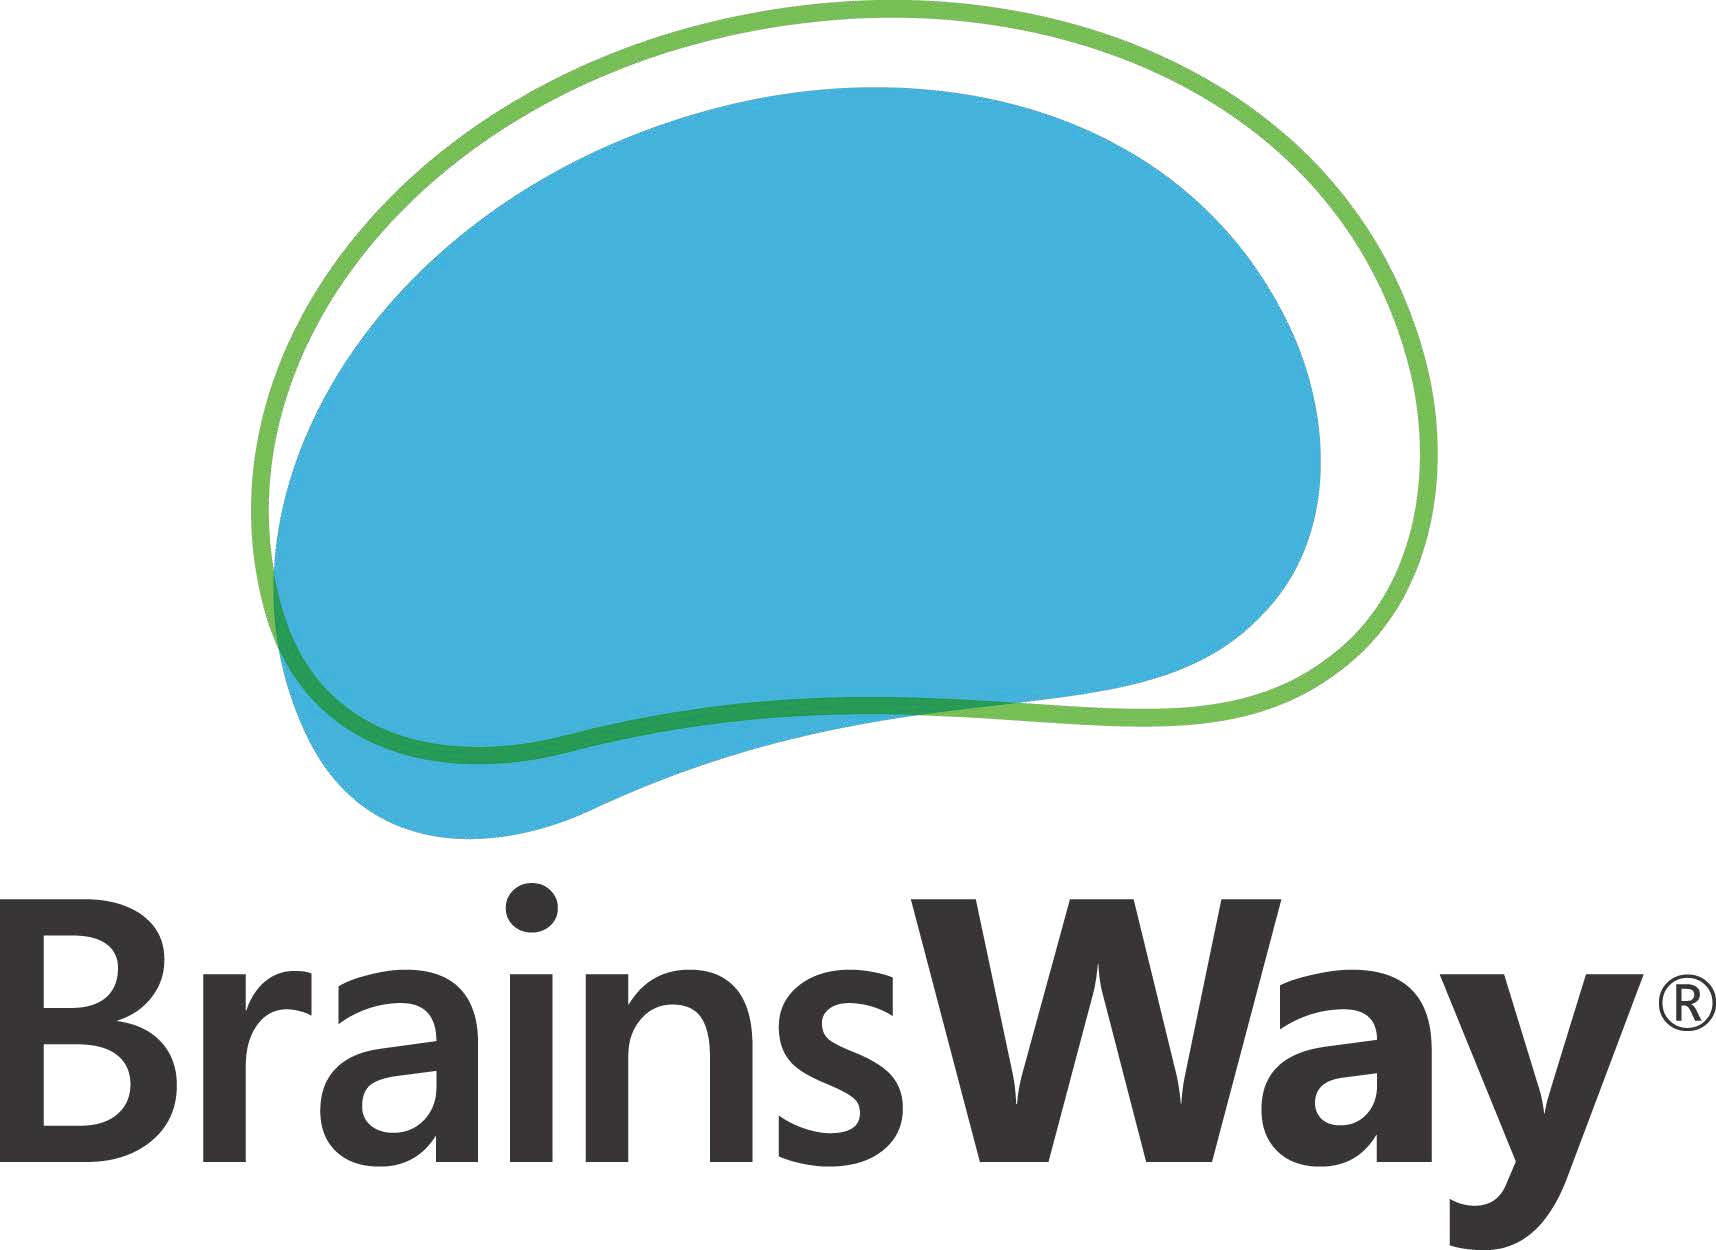 BrainsWay 2021 logo.jpg